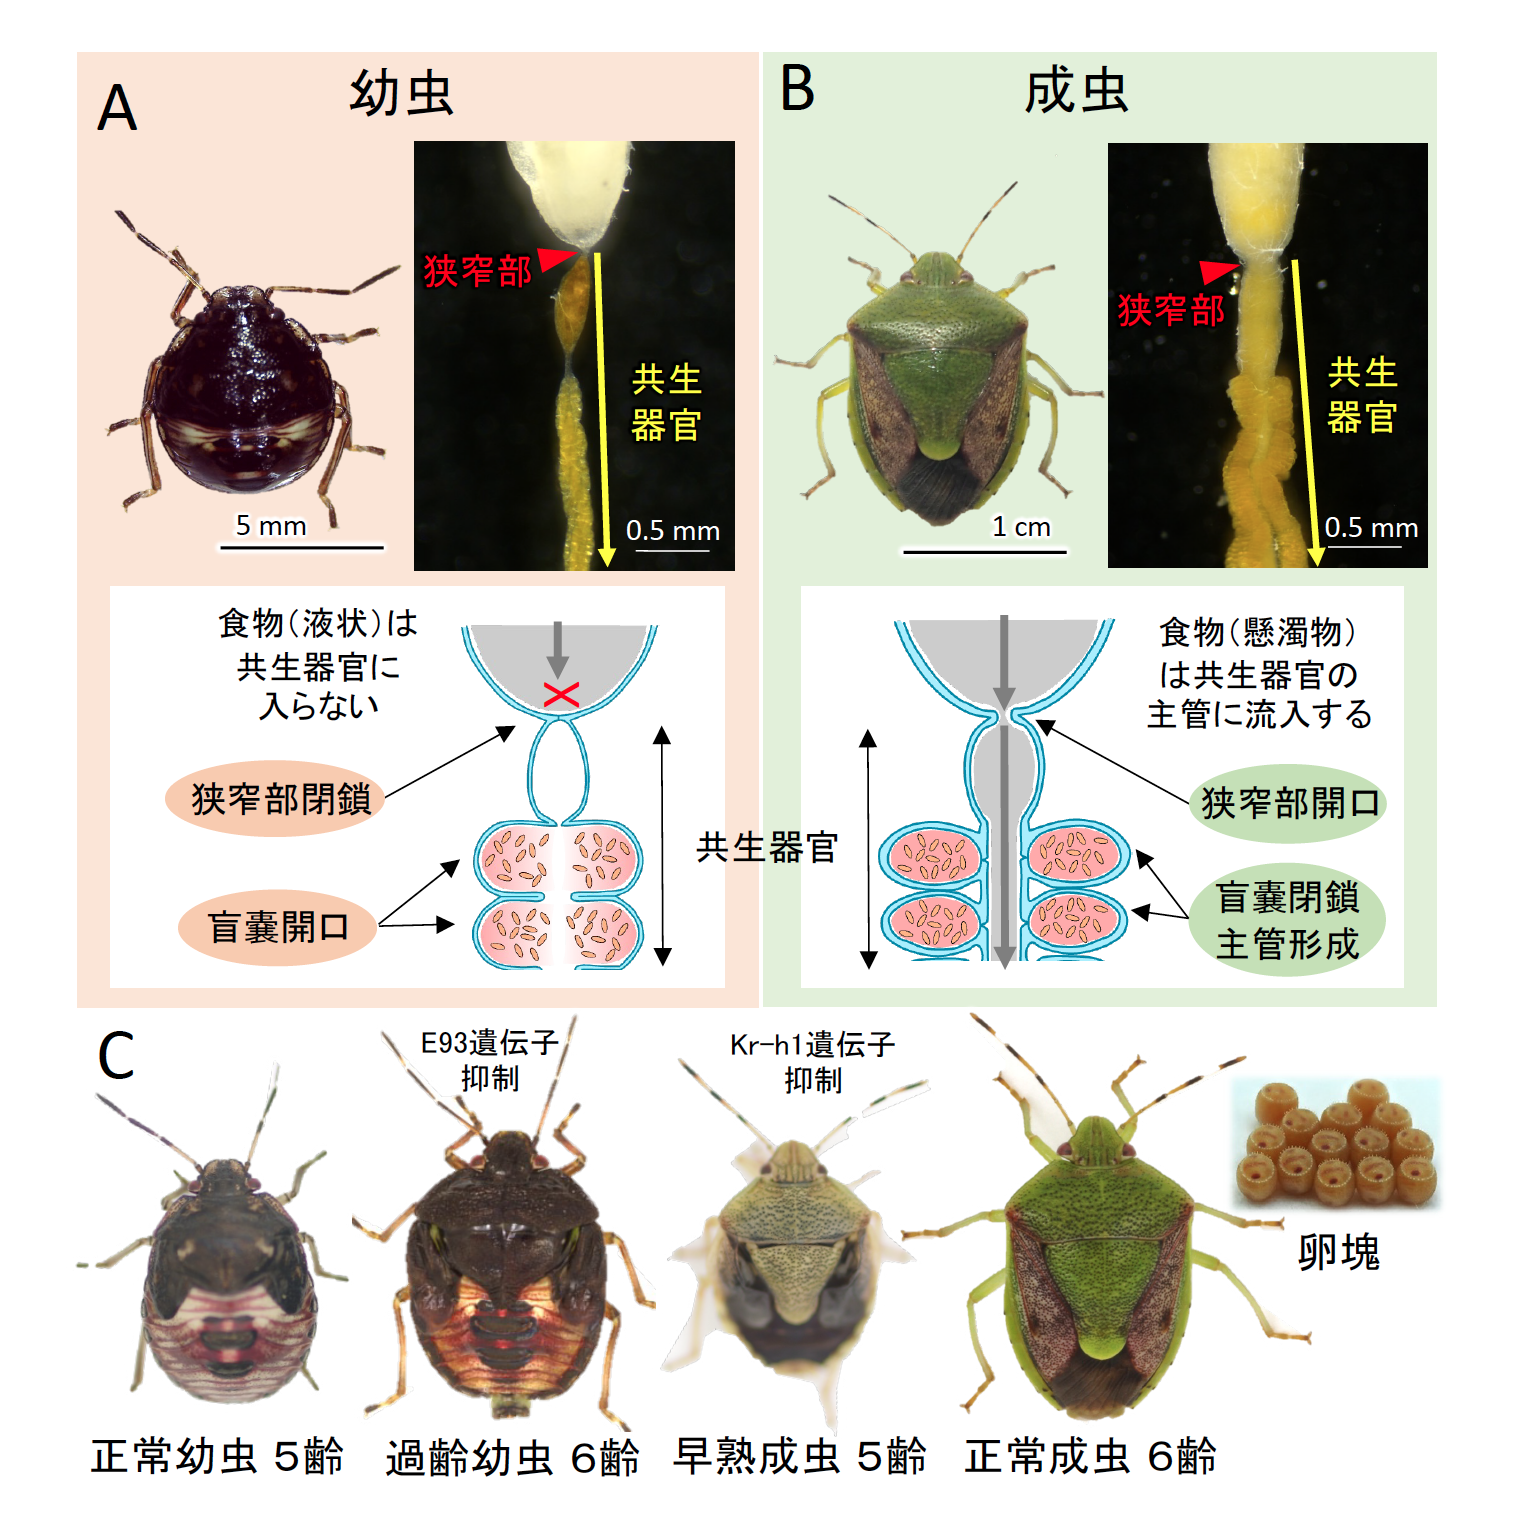 Symbiotic organs and symbiotic bacteria regulated in insect metamorphosis.